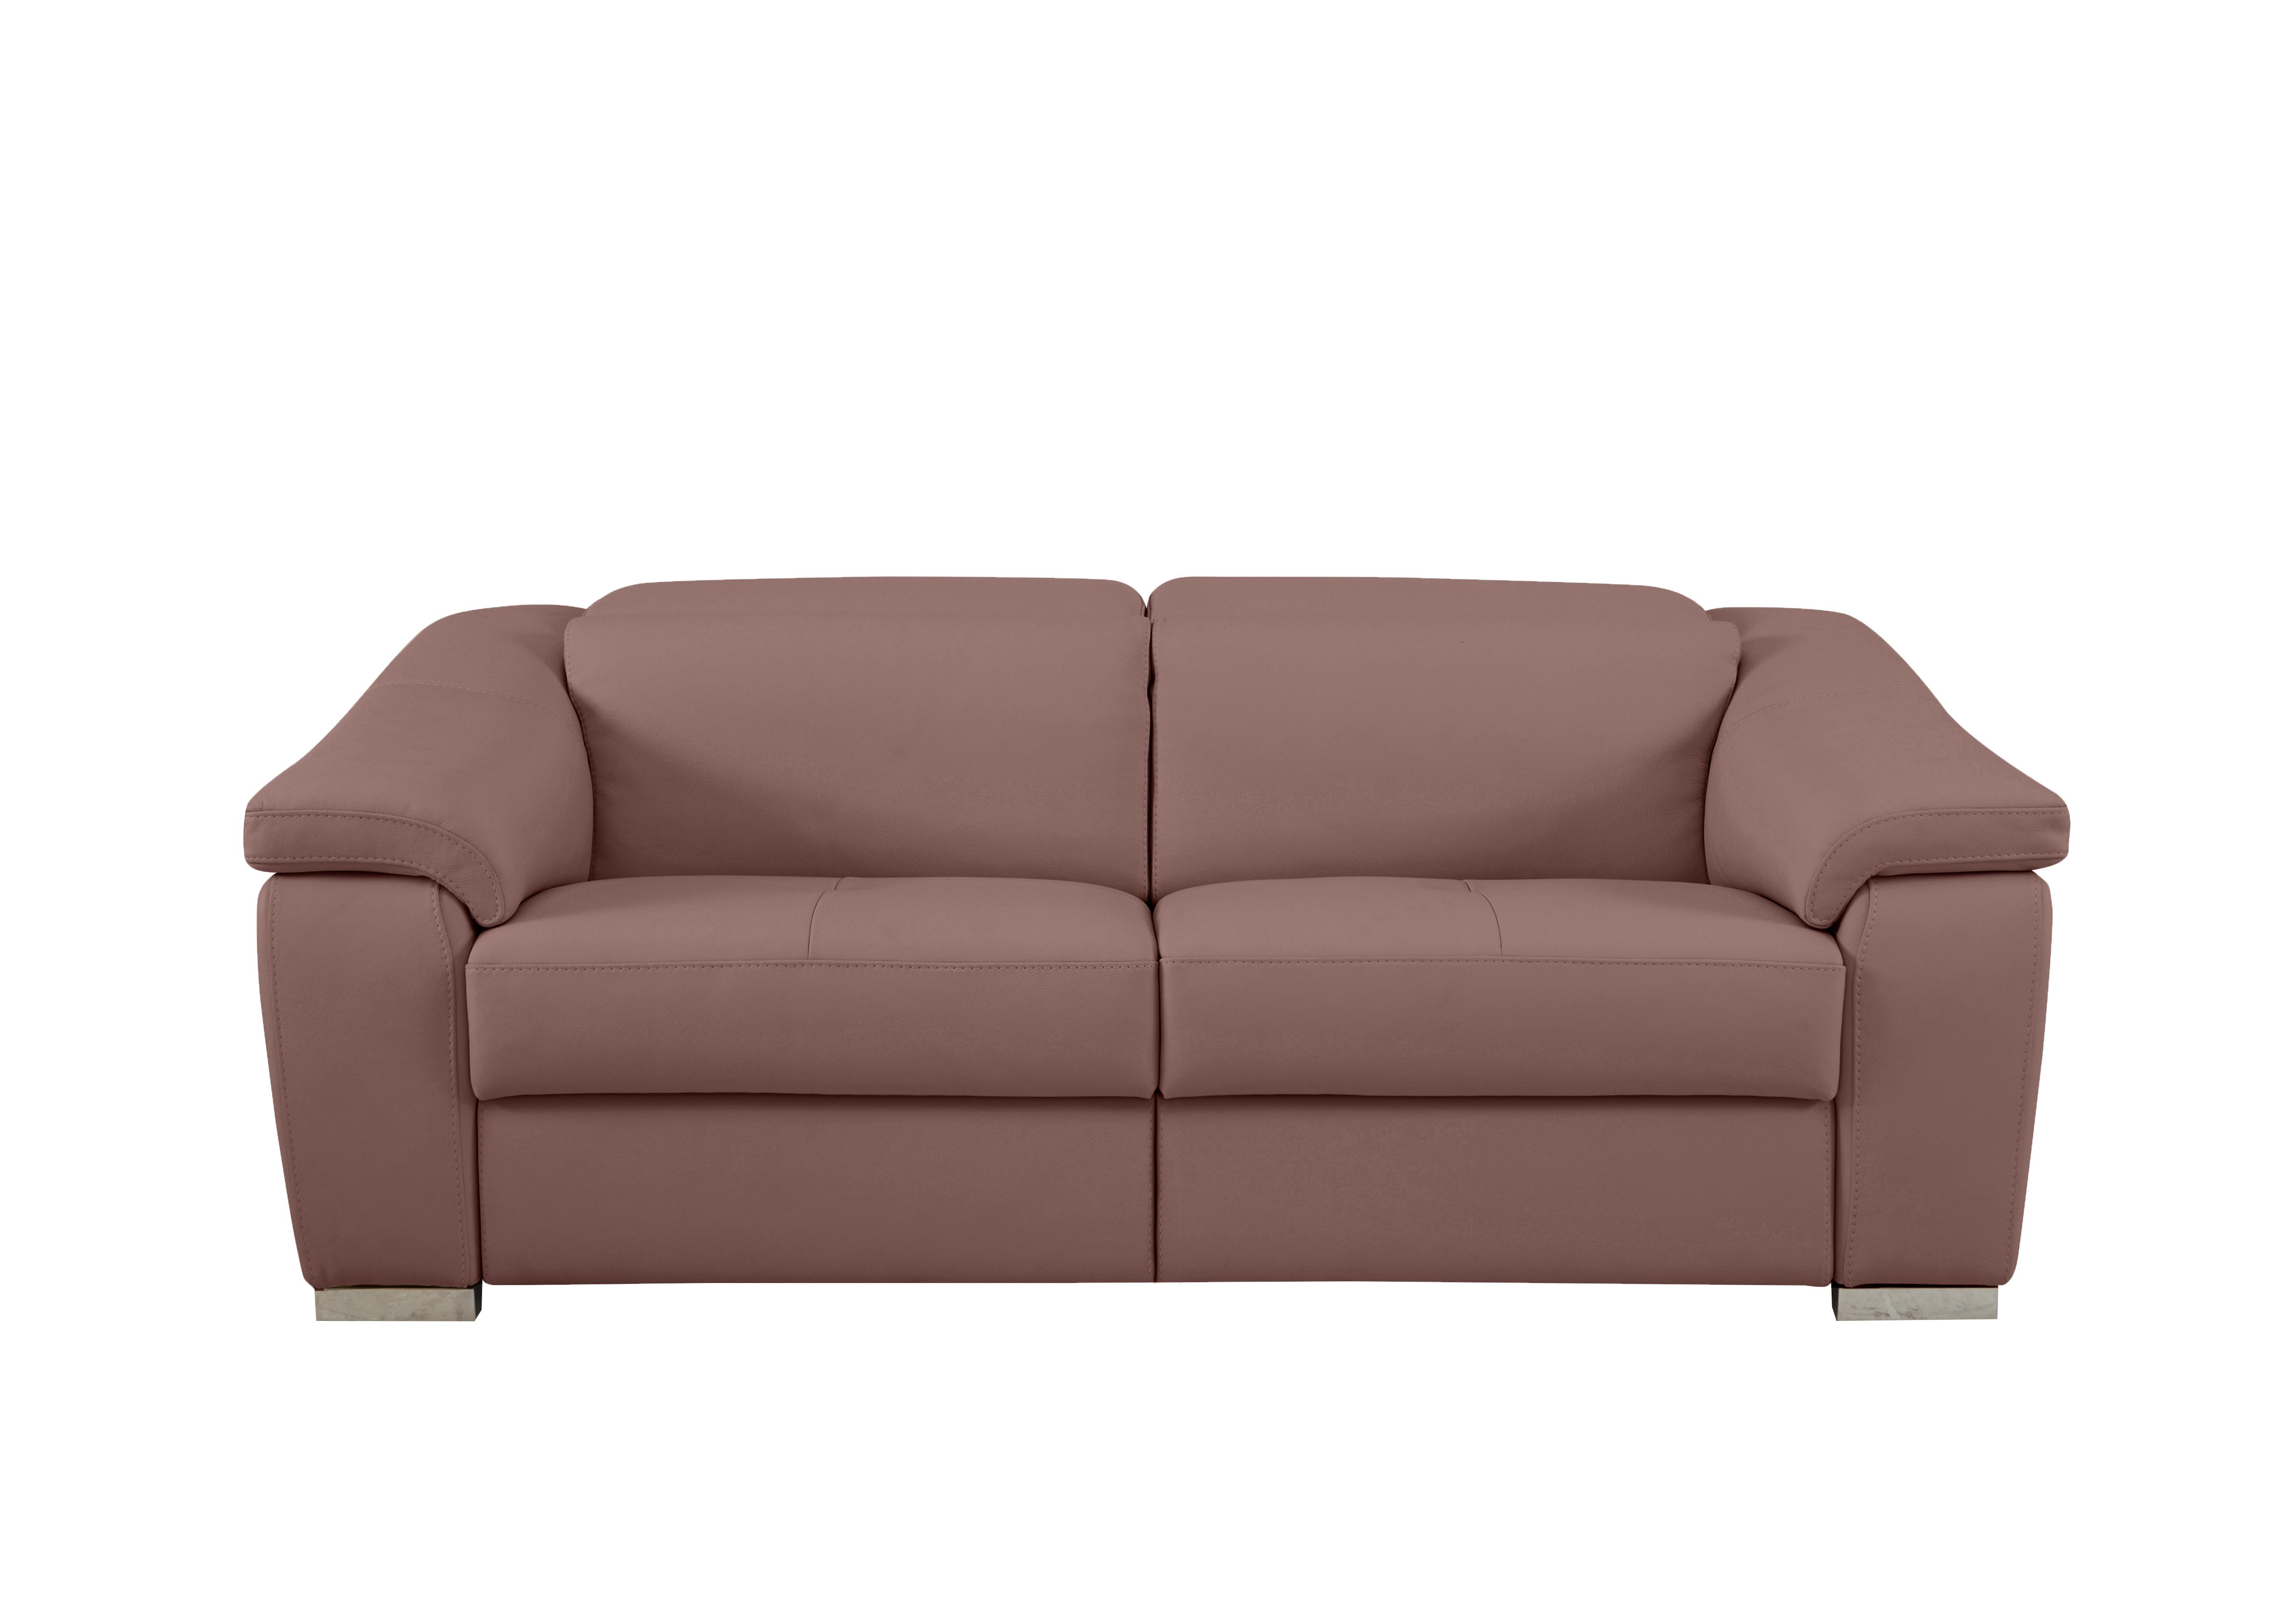 Galileo 3 Seater Leather Sofa in Botero Cipria 2160 Ch on Furniture Village